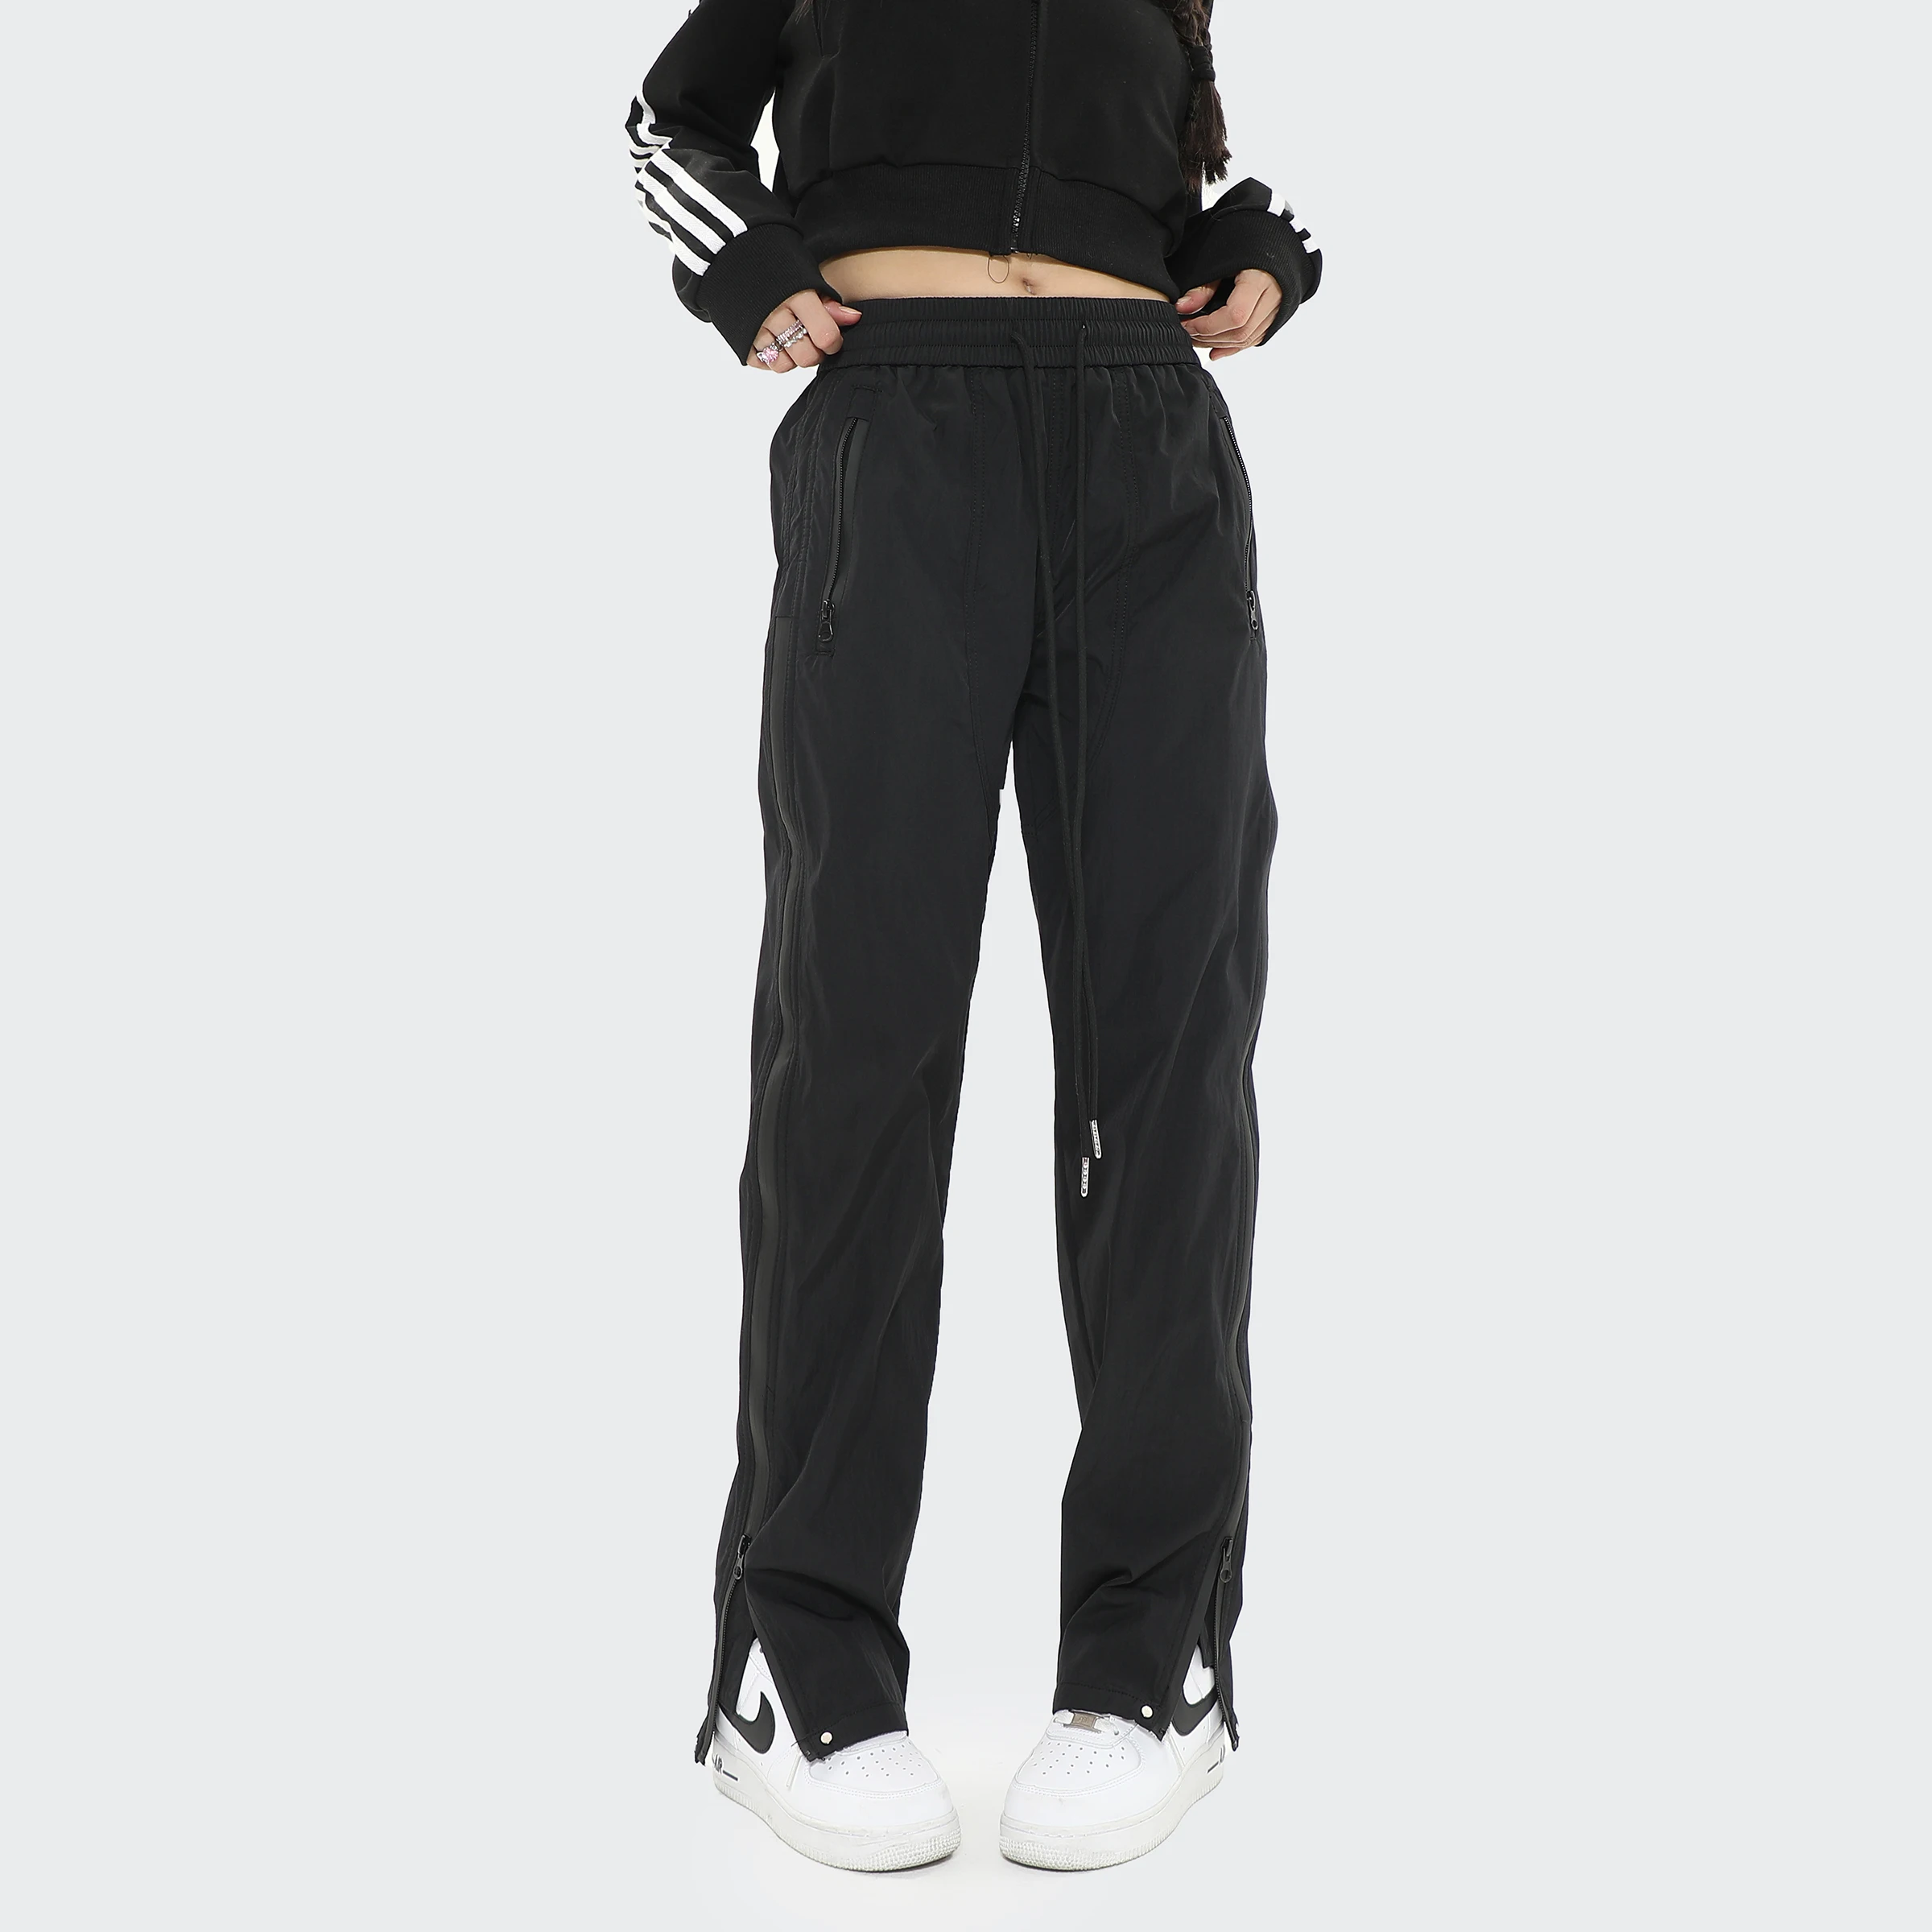 Vintage,Harajuku,Hip Hop Men's overalls,Zipper edge strip, Slacks, Men's sports wide leg pants